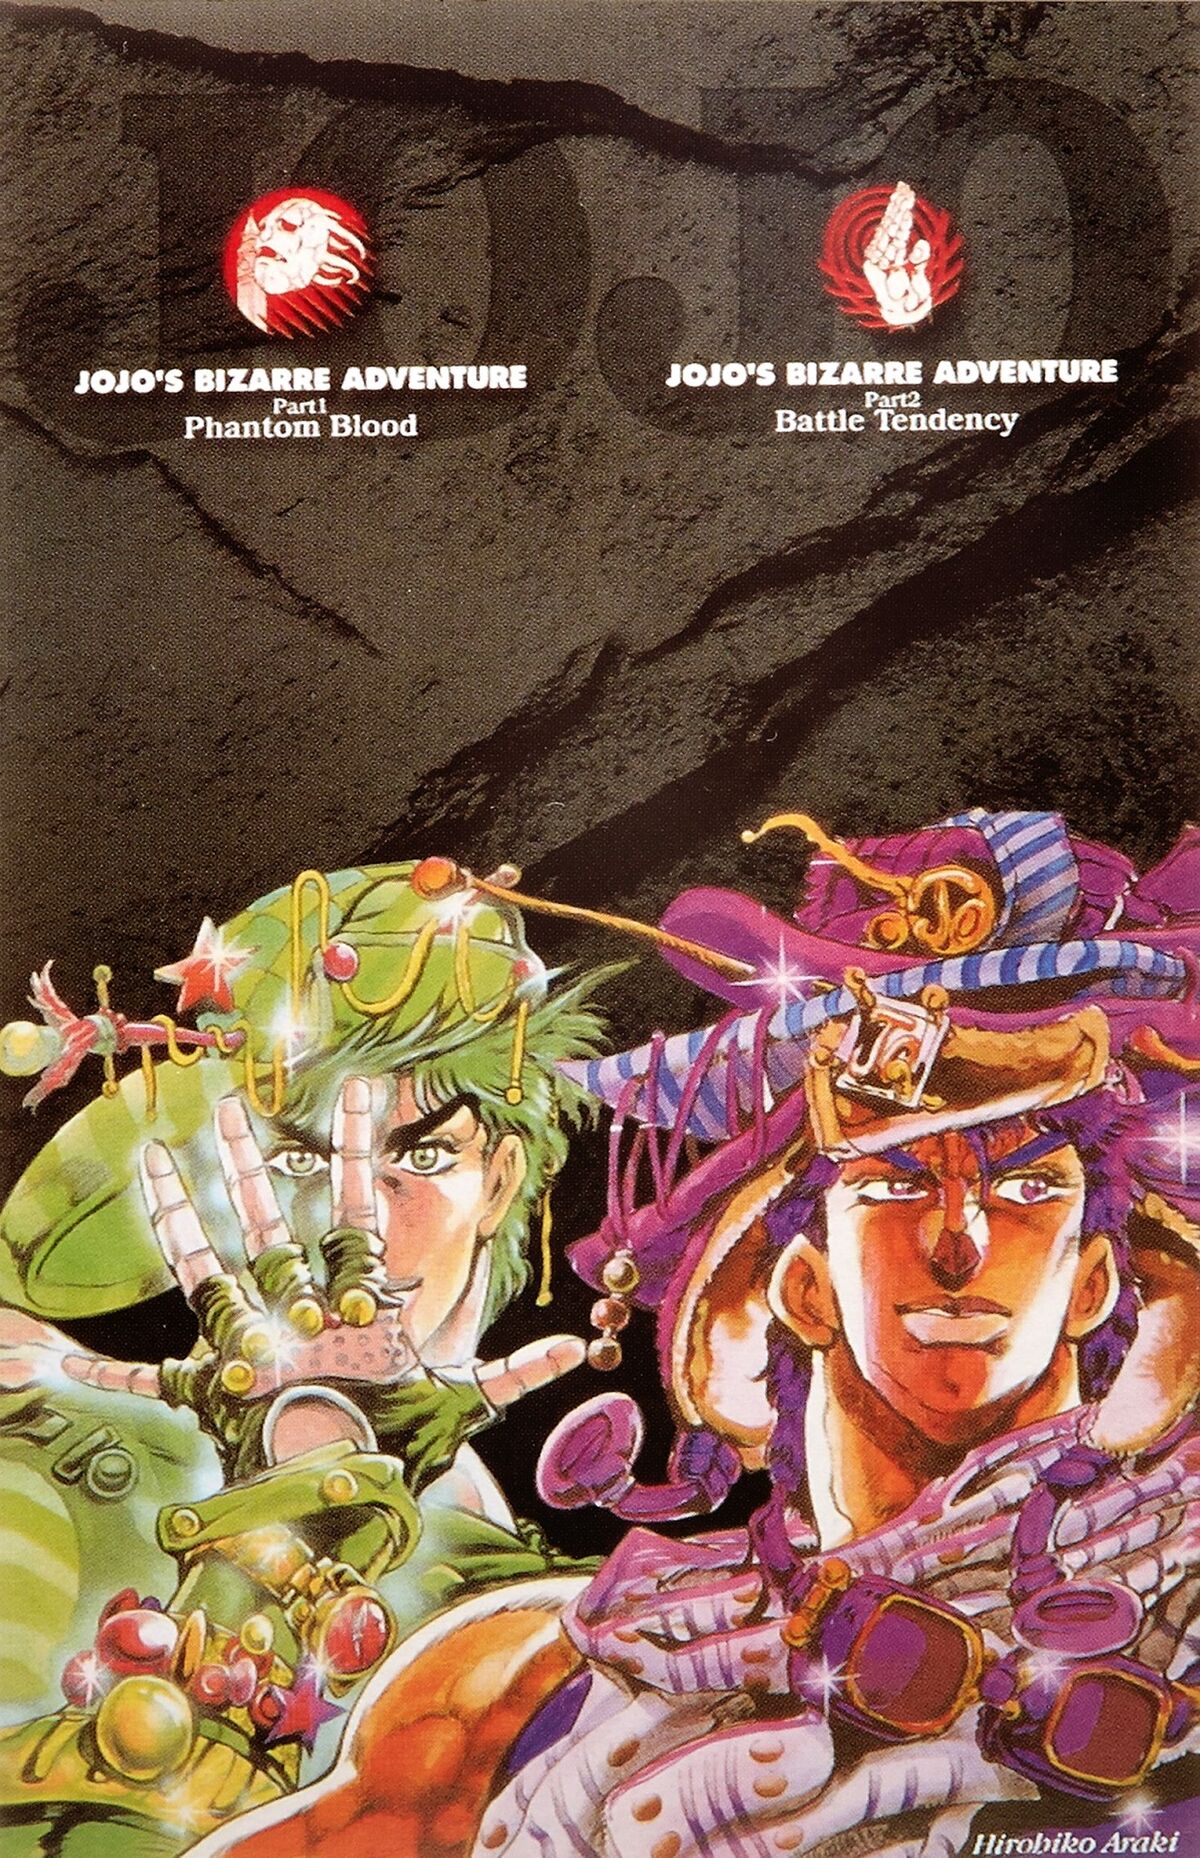 JoJo's Bizarre Adventure Box vol.30-39 - Jump Comics (japanese